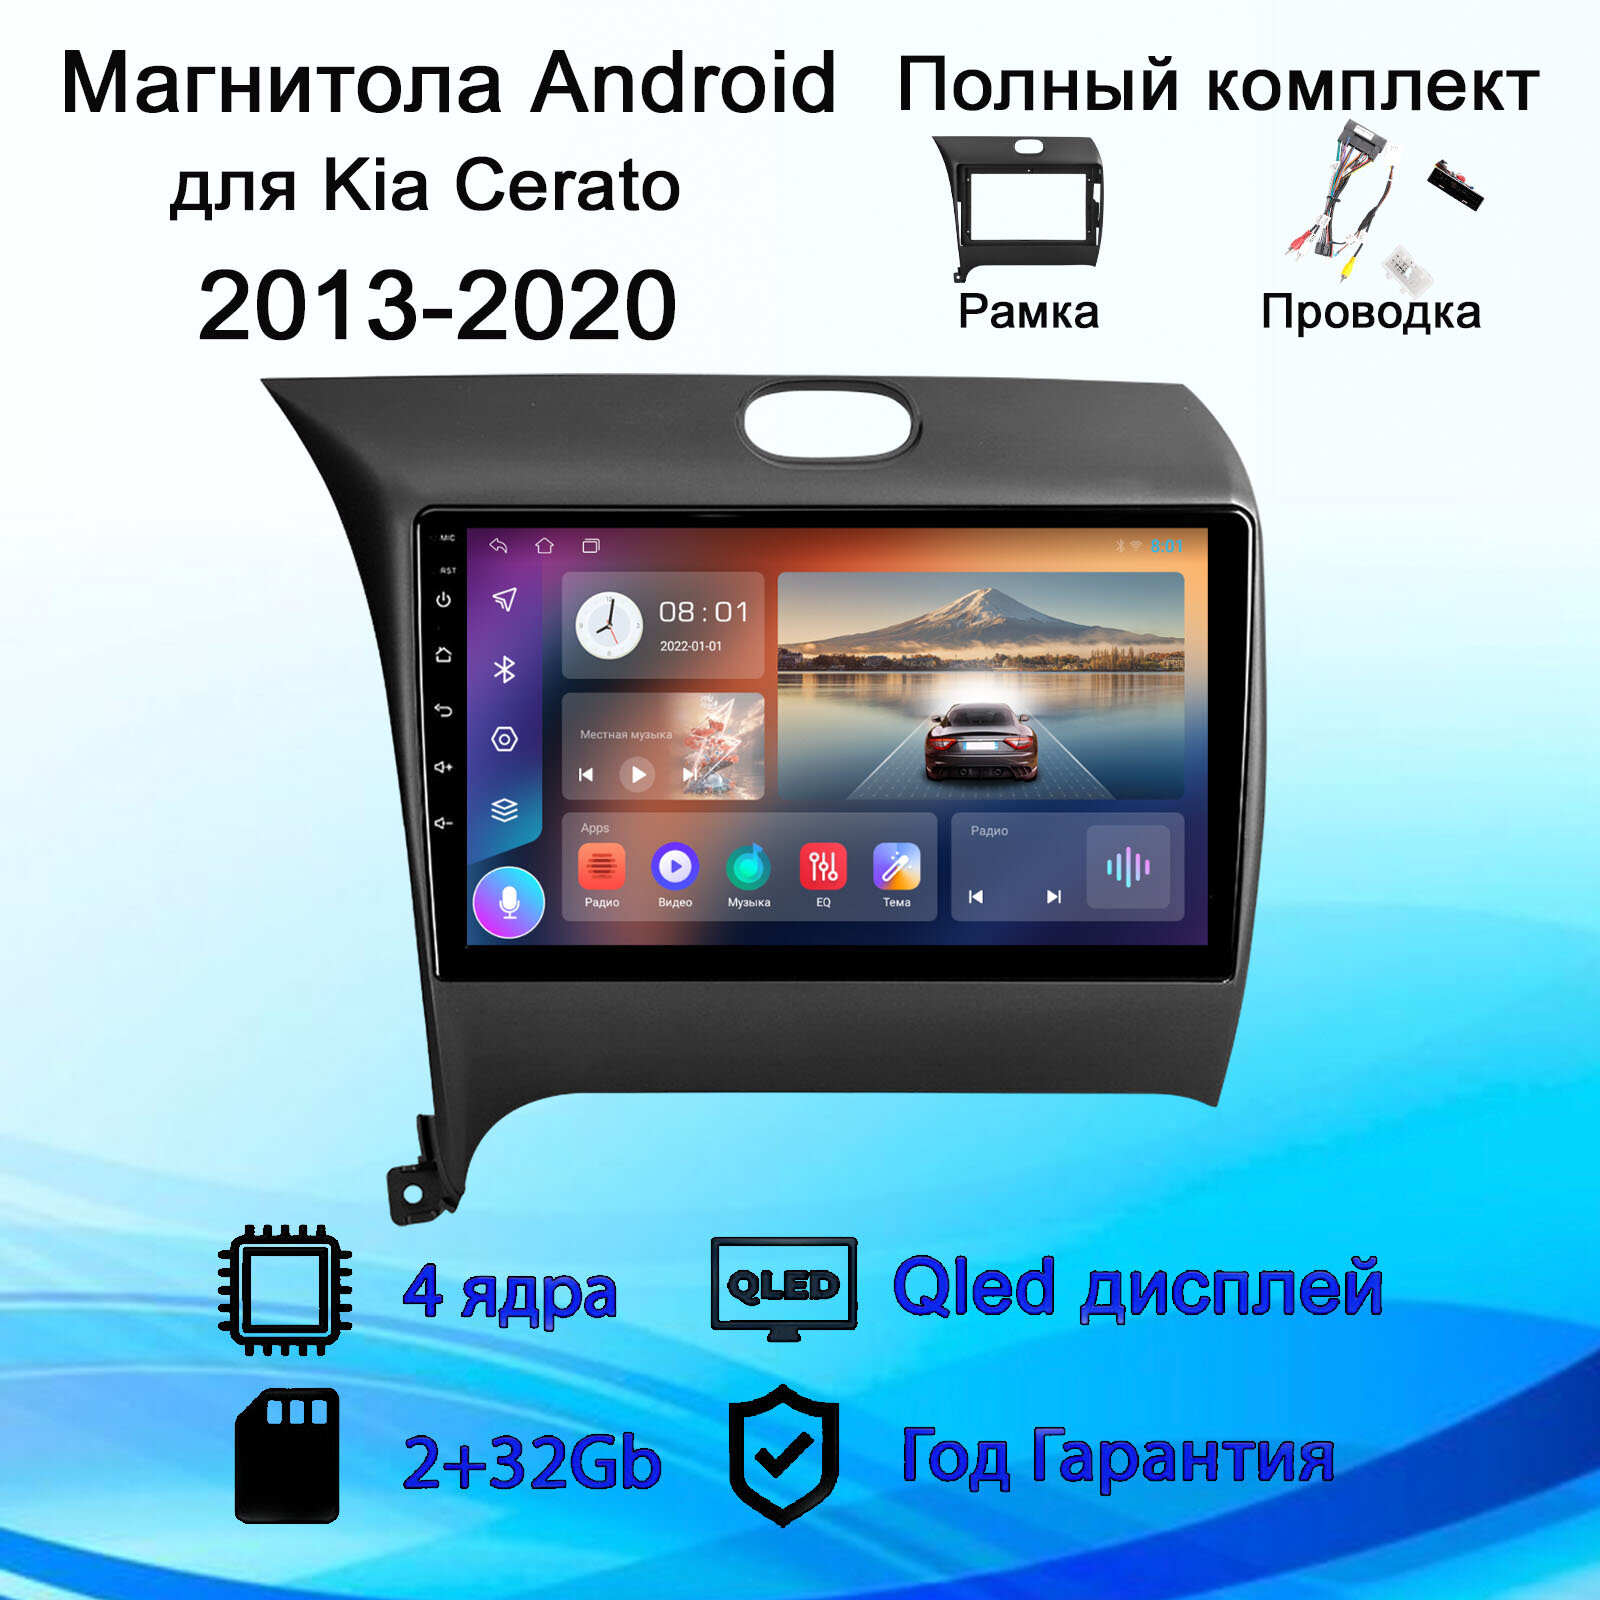 Магнитола Андроид для Kia Cerato 2013-2020 2+32Gb (Android/Wi-FI/Bluetooh/2DIN/Штатная магнитола/Головное устройство